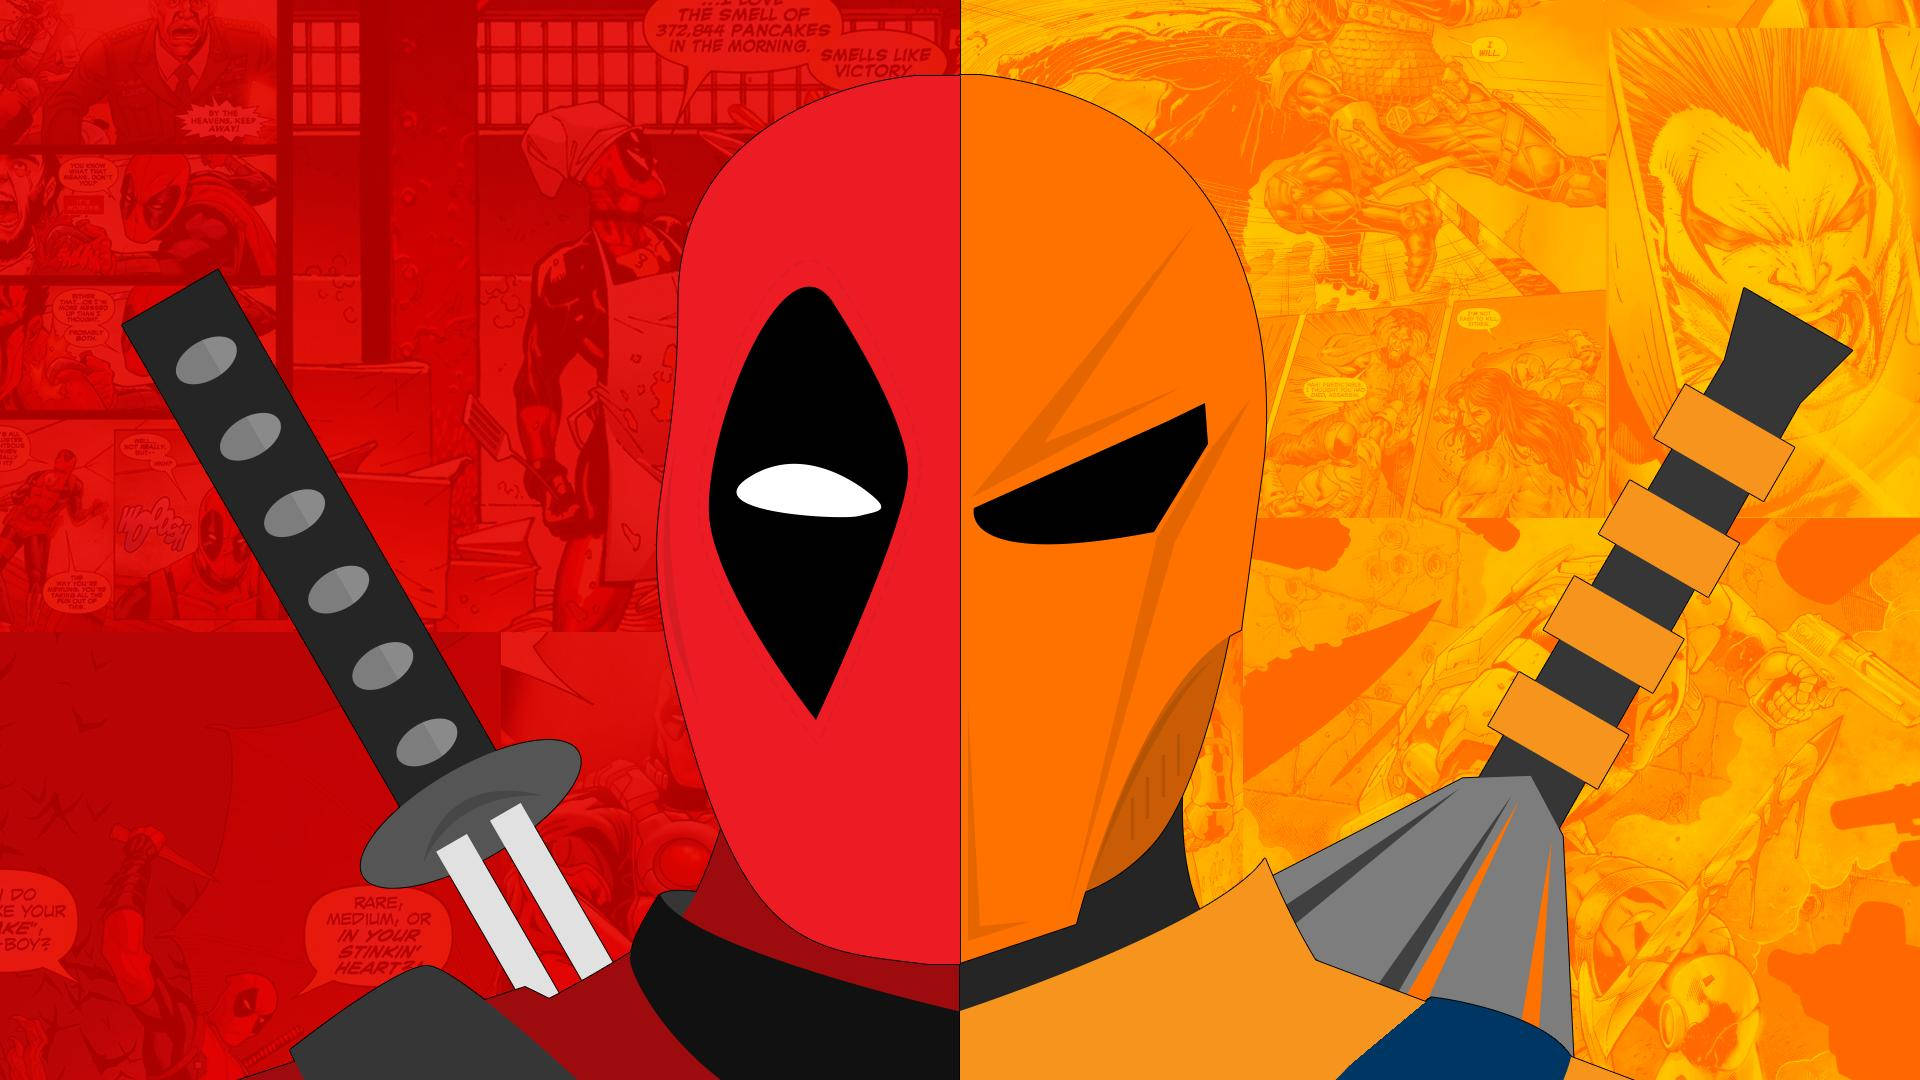 Deadpool and Deathstroke Face Off in Epic Showdown Wallpaper